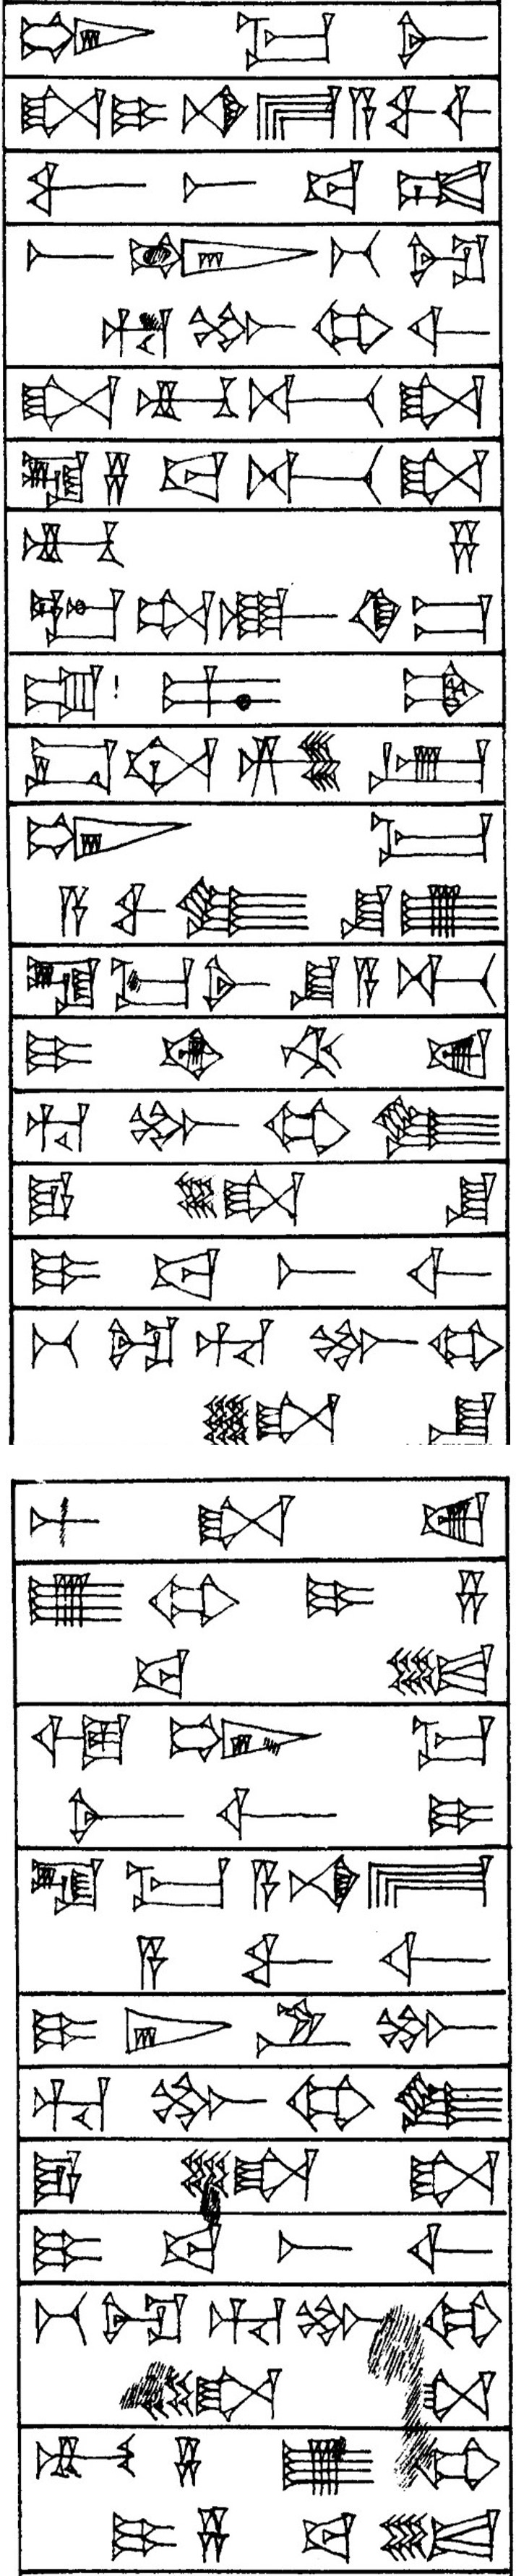 Law § 151 - Cuneiform - Law Code of Hammurabi